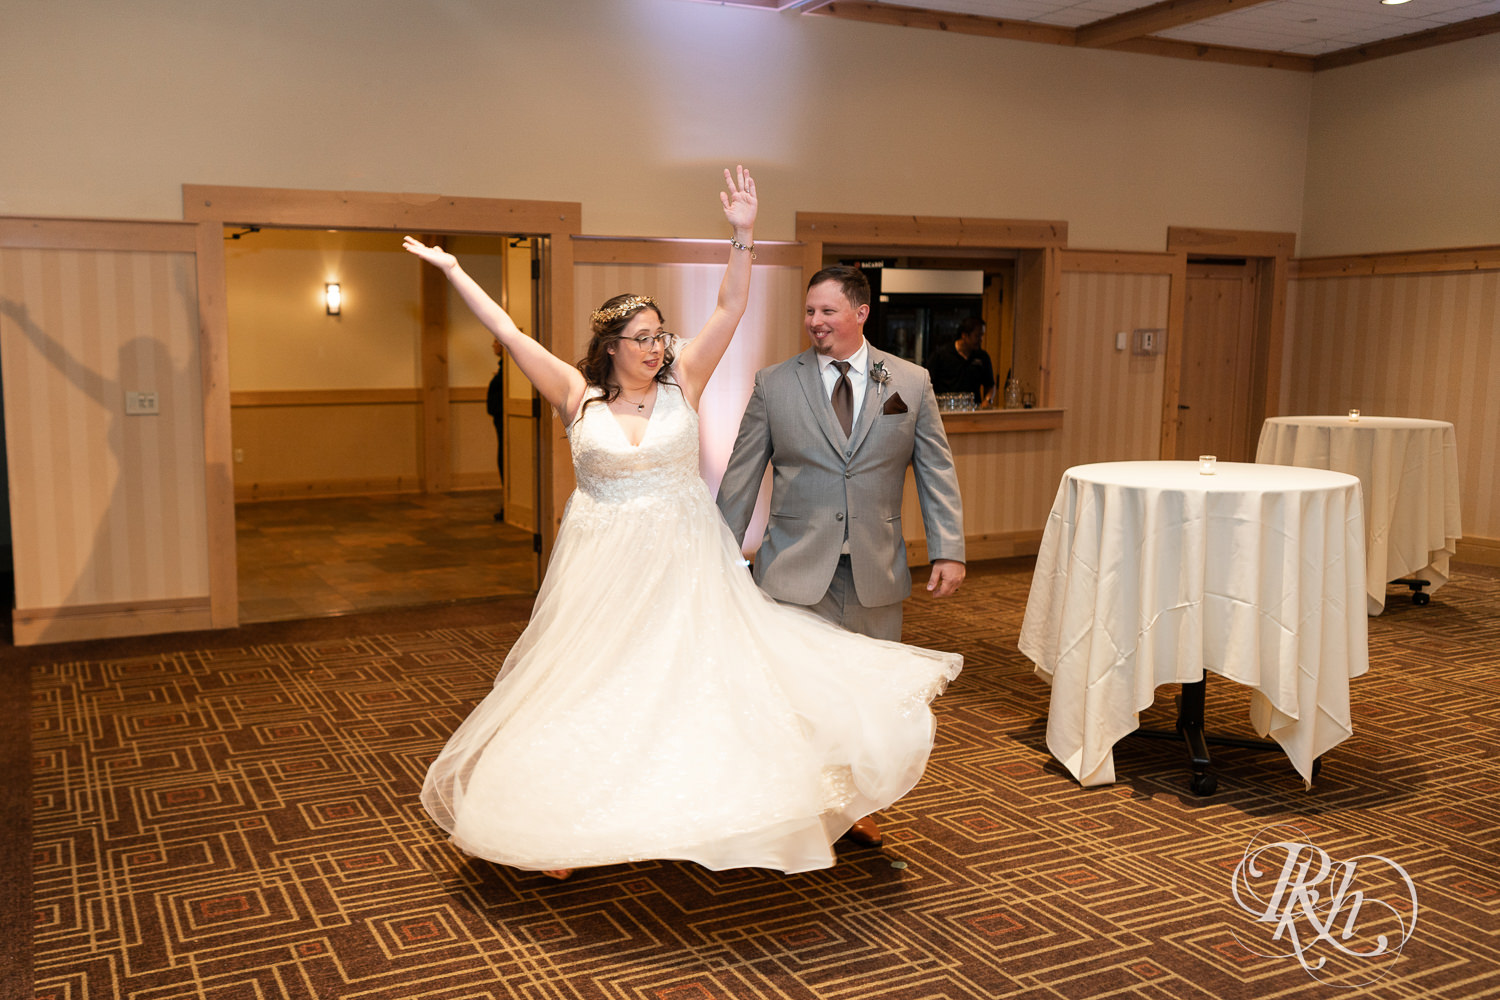 Bride and groom enter wedding reception at Bunker Hills Event Center in Coon Rapids, Minnesota.